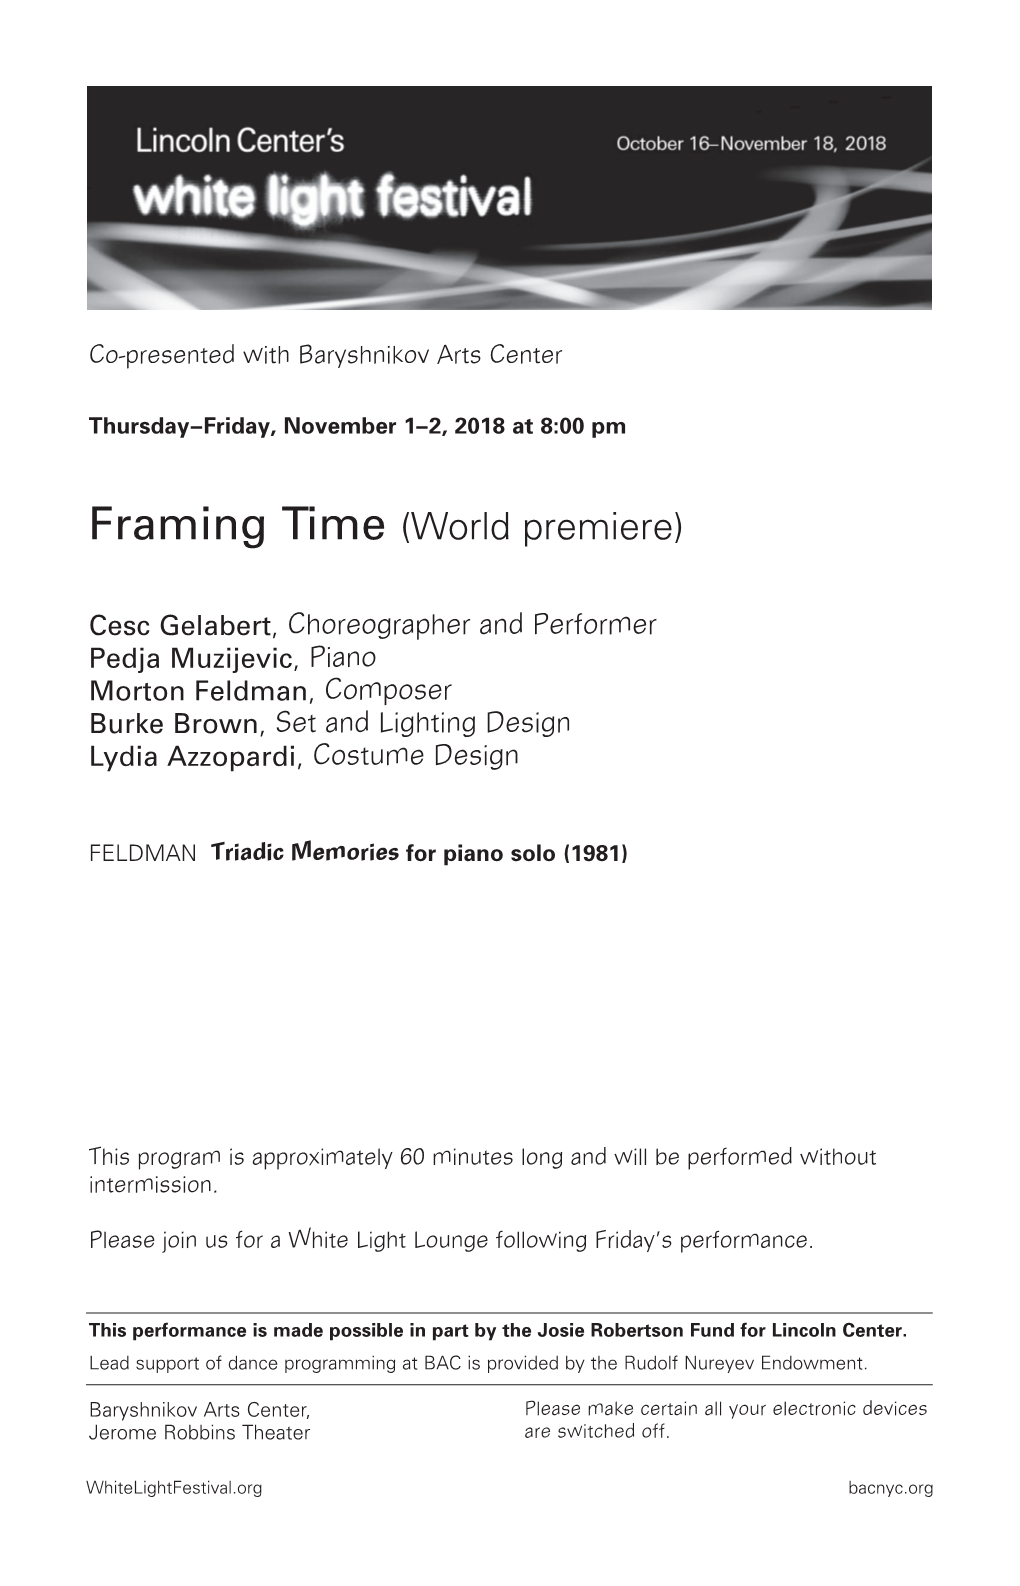 Framing Time (World Premiere)